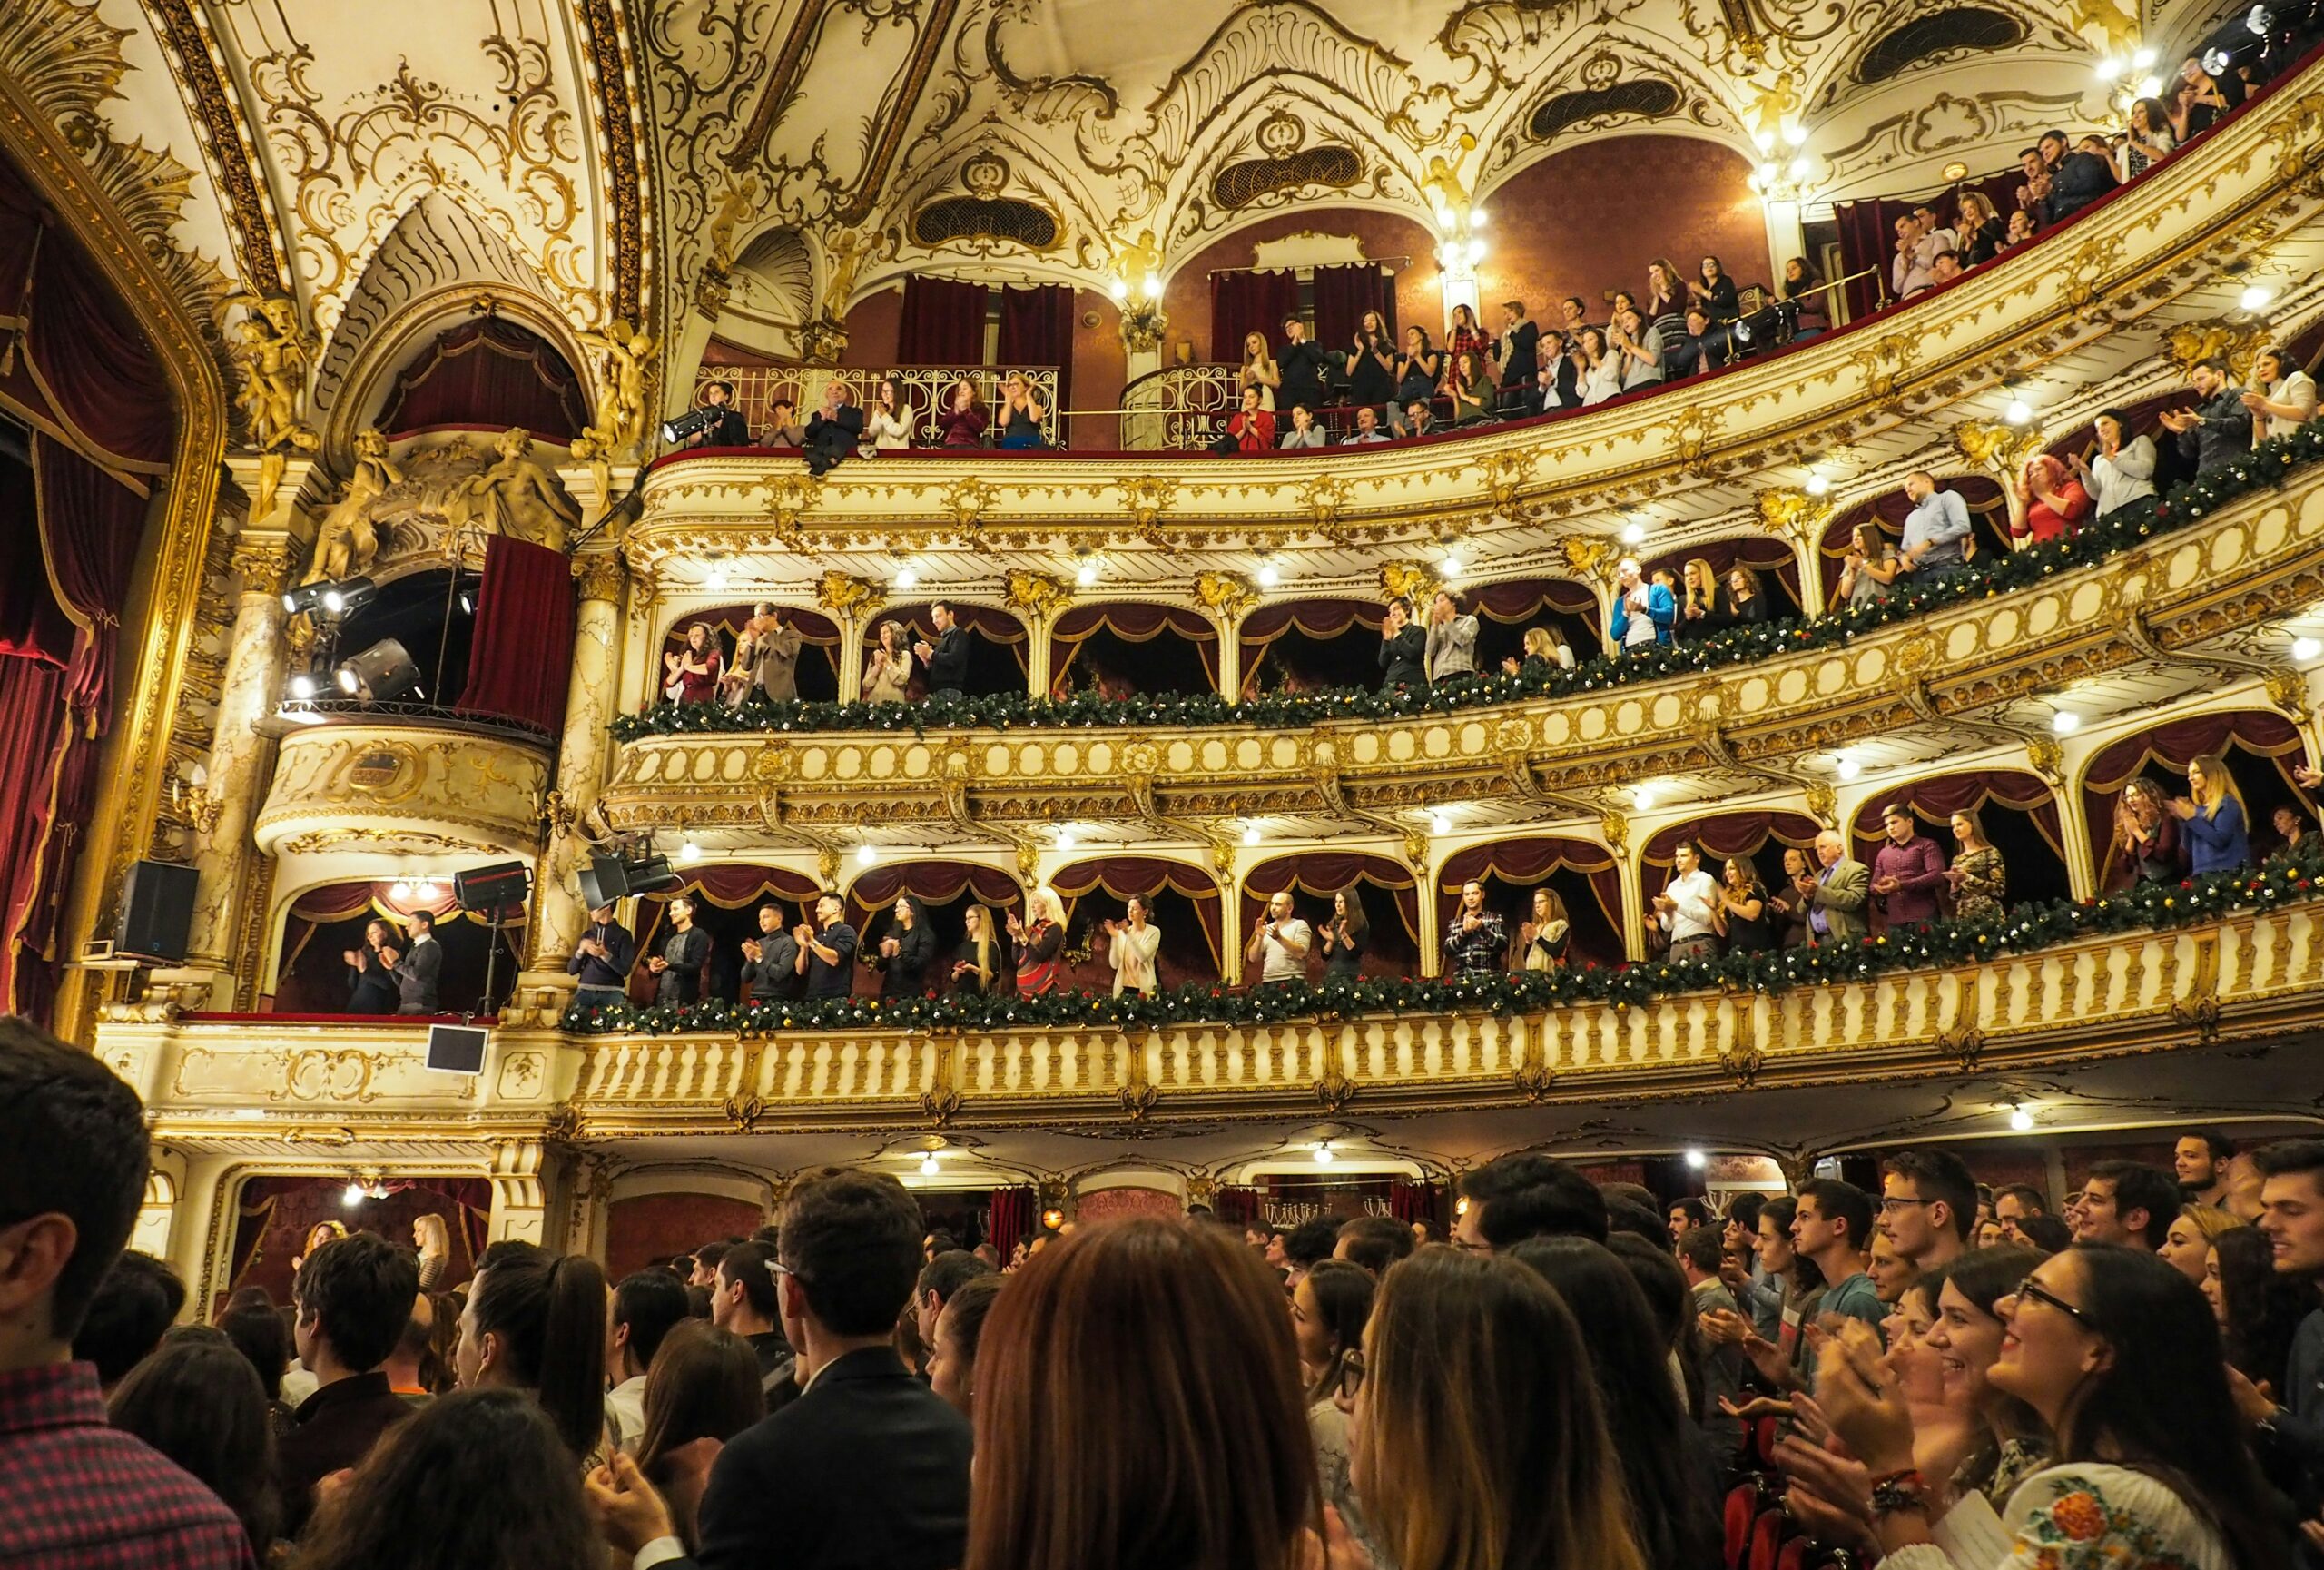 opera theater audience by viah dumitru on unsplash